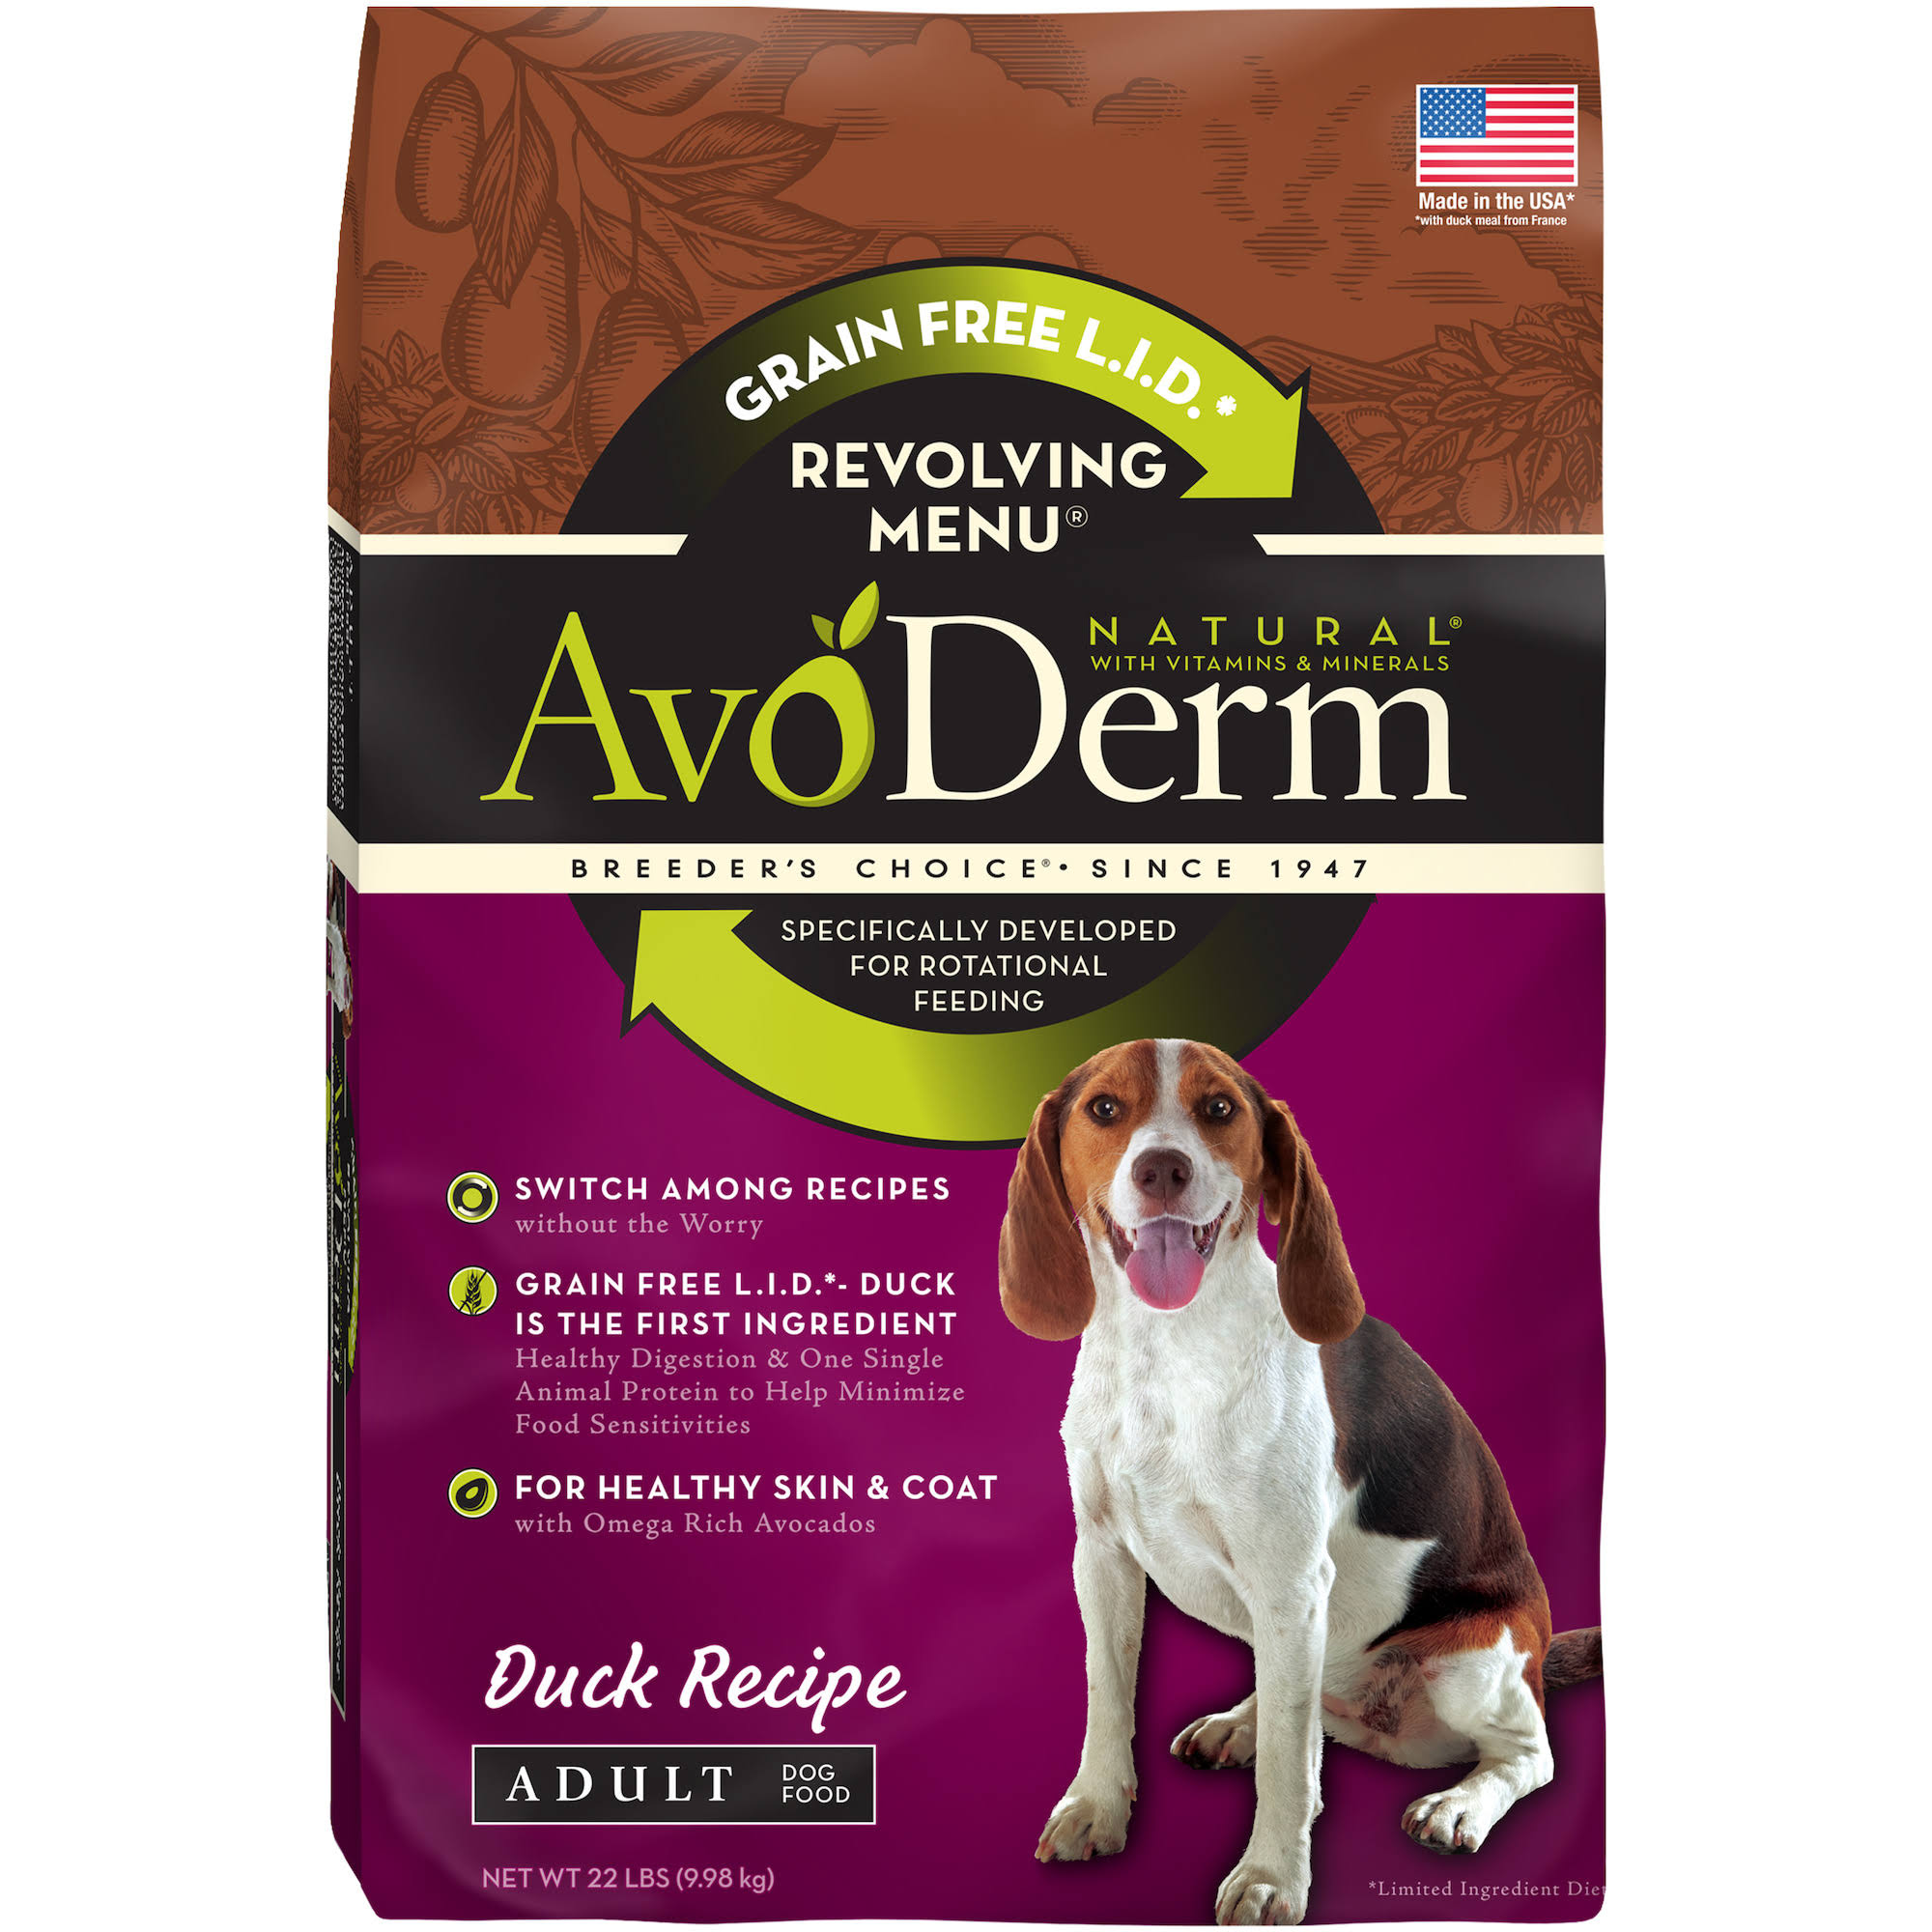 AvoDerm Natural Revolving Menu Adult Dog Food - Duck, 22lb